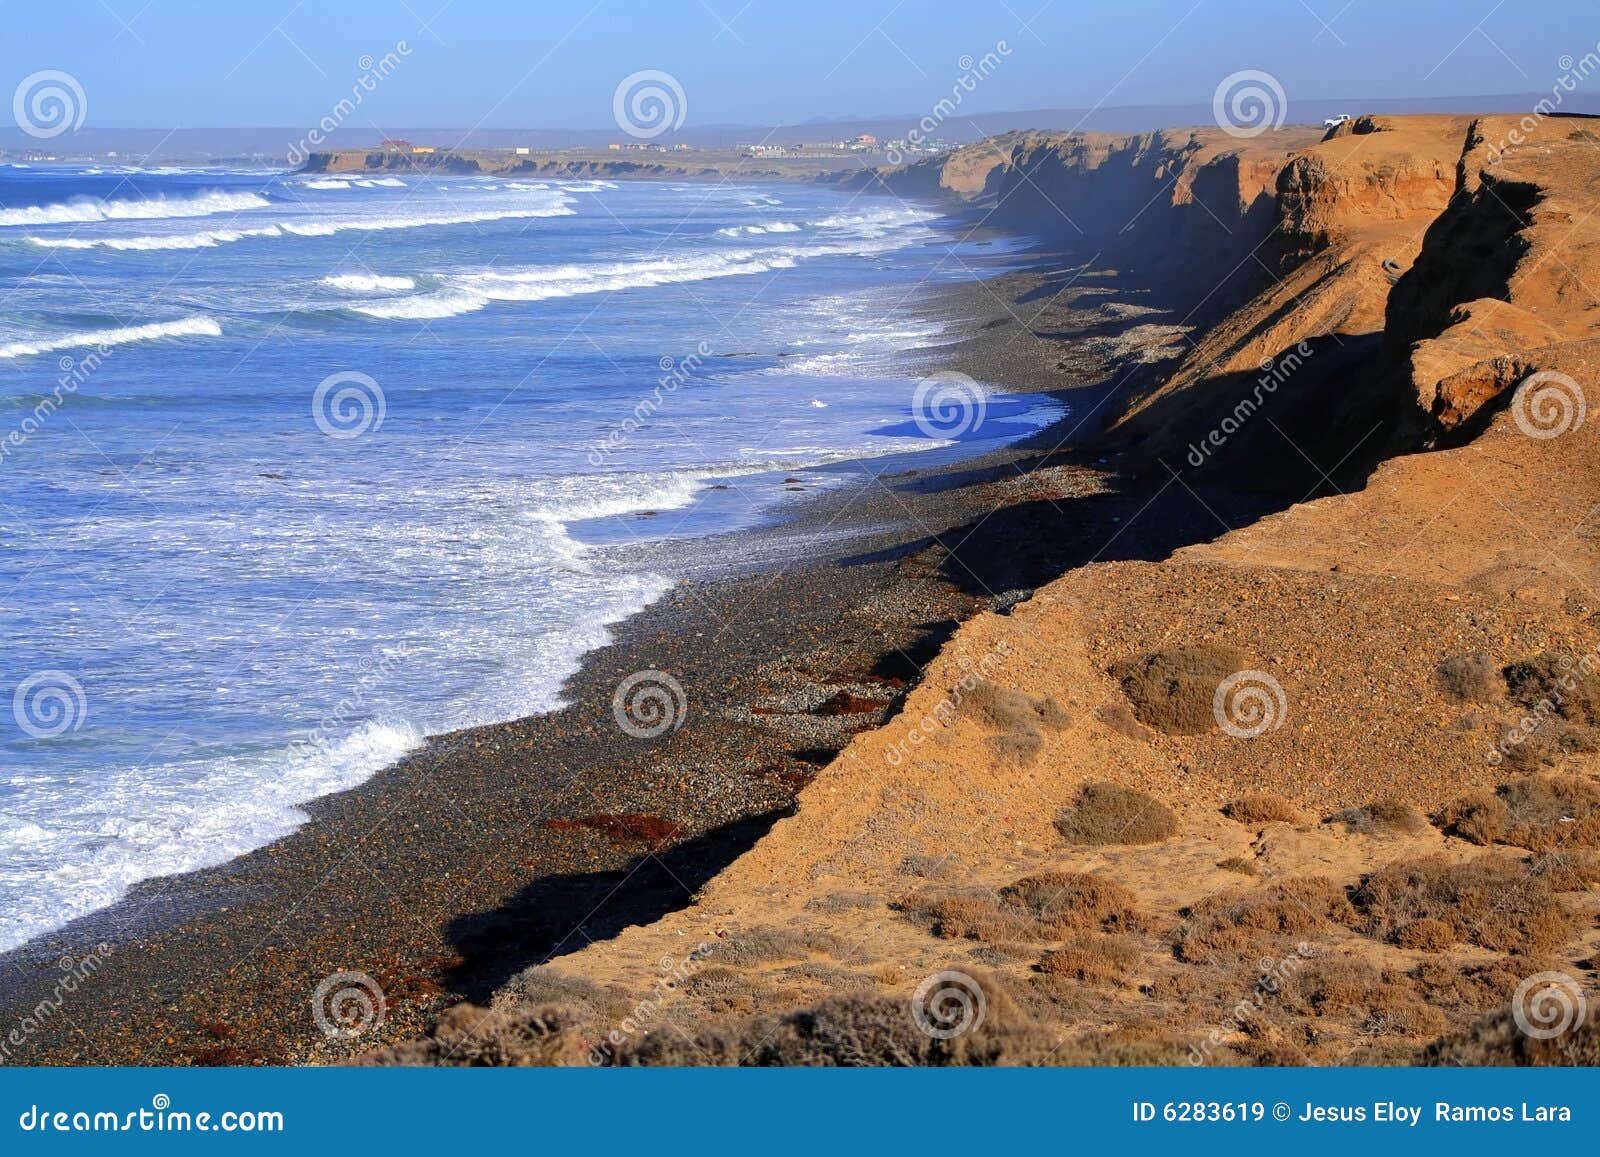 coastline of baja california